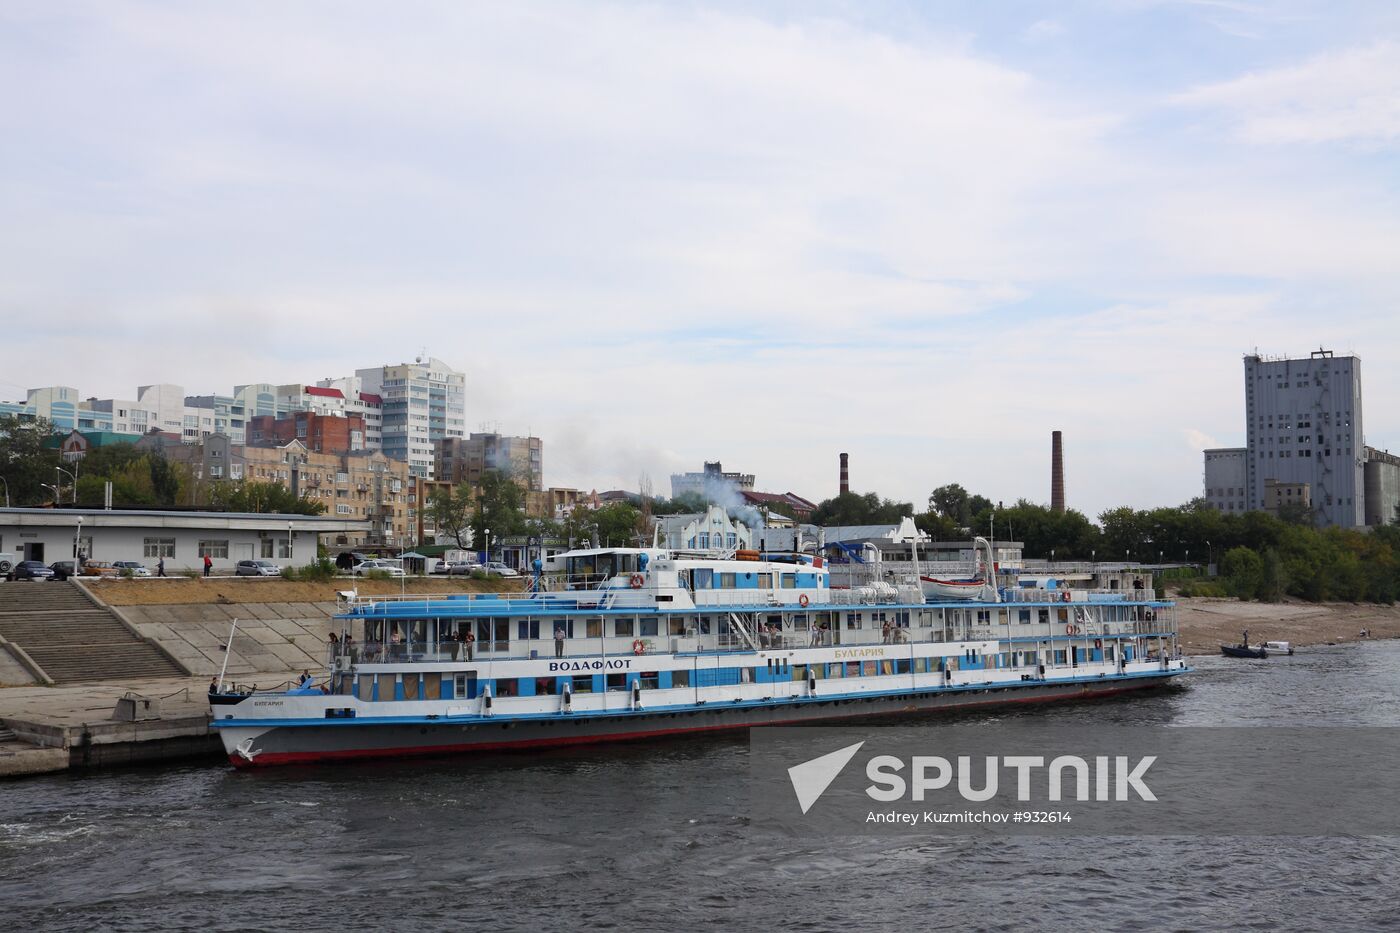 Ship "Bulgaria" in the port of Samara